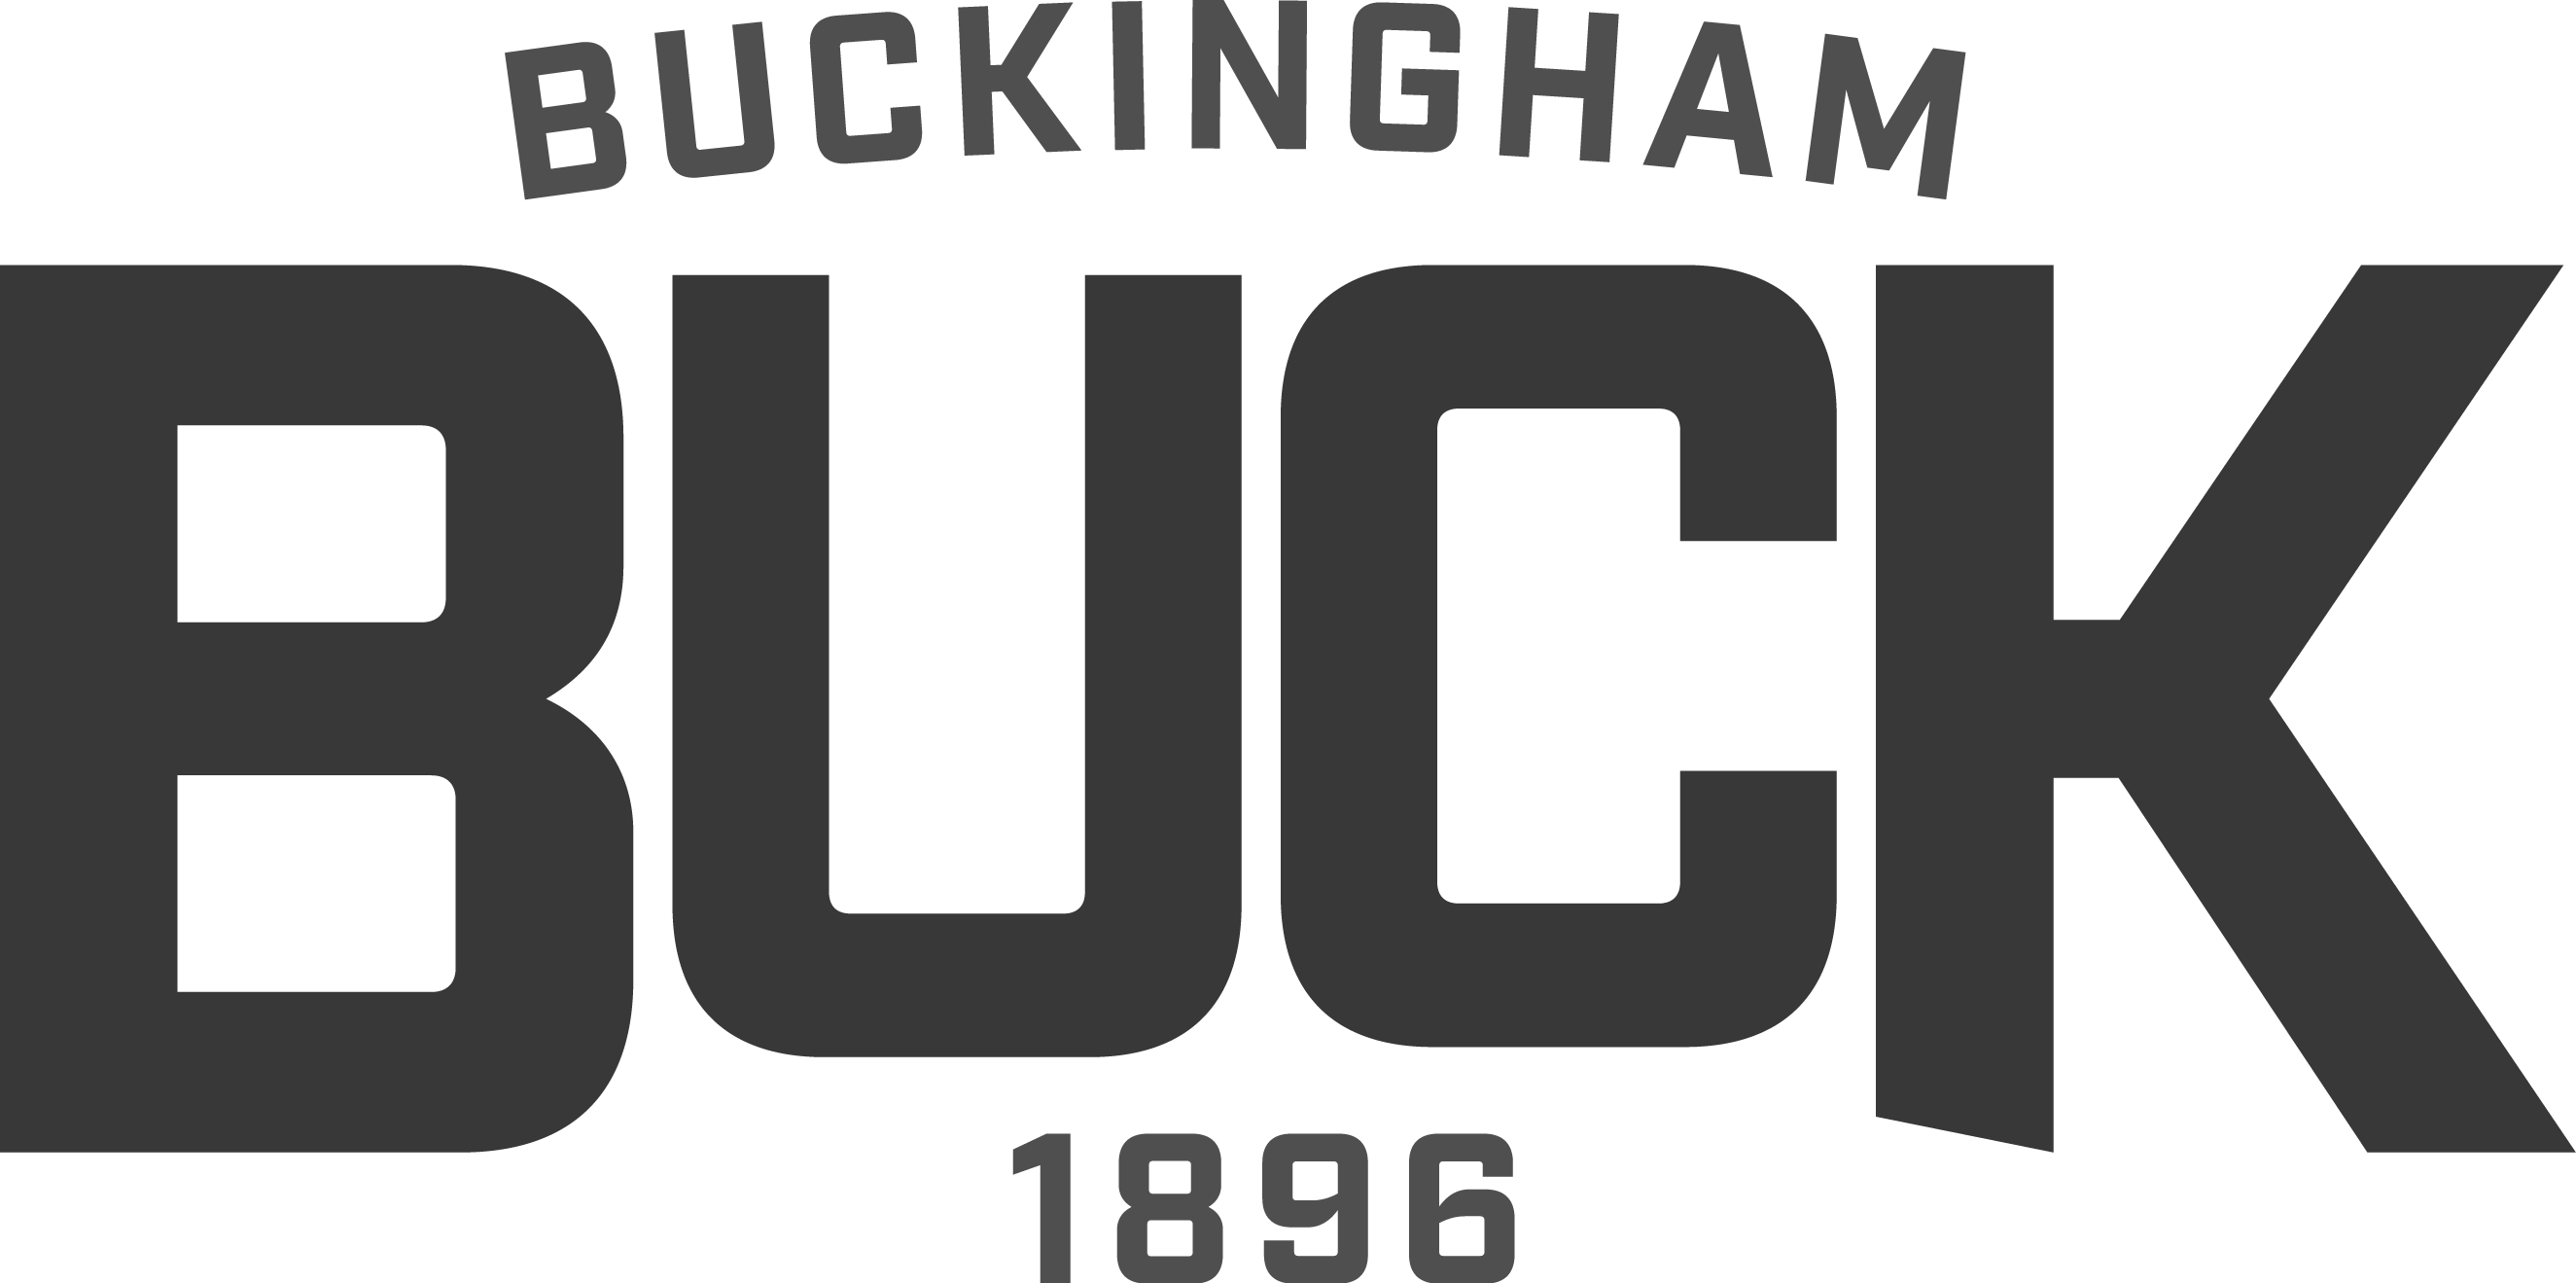 Buckingham Buck 1896